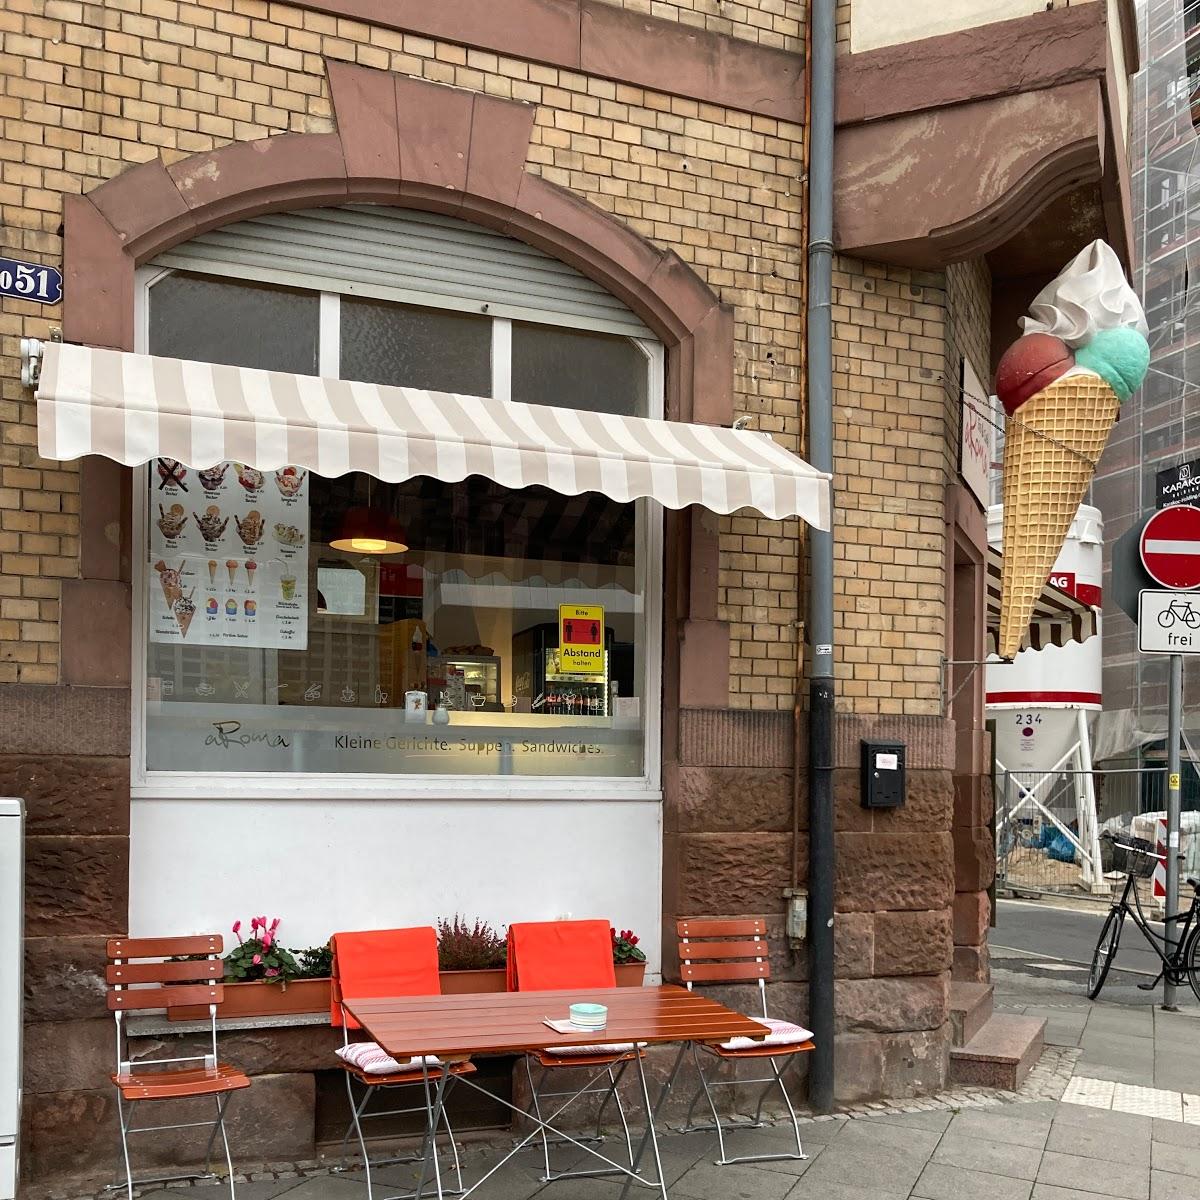 Restaurant "Eiscafé Café aRoma" in Frankfurt am Main